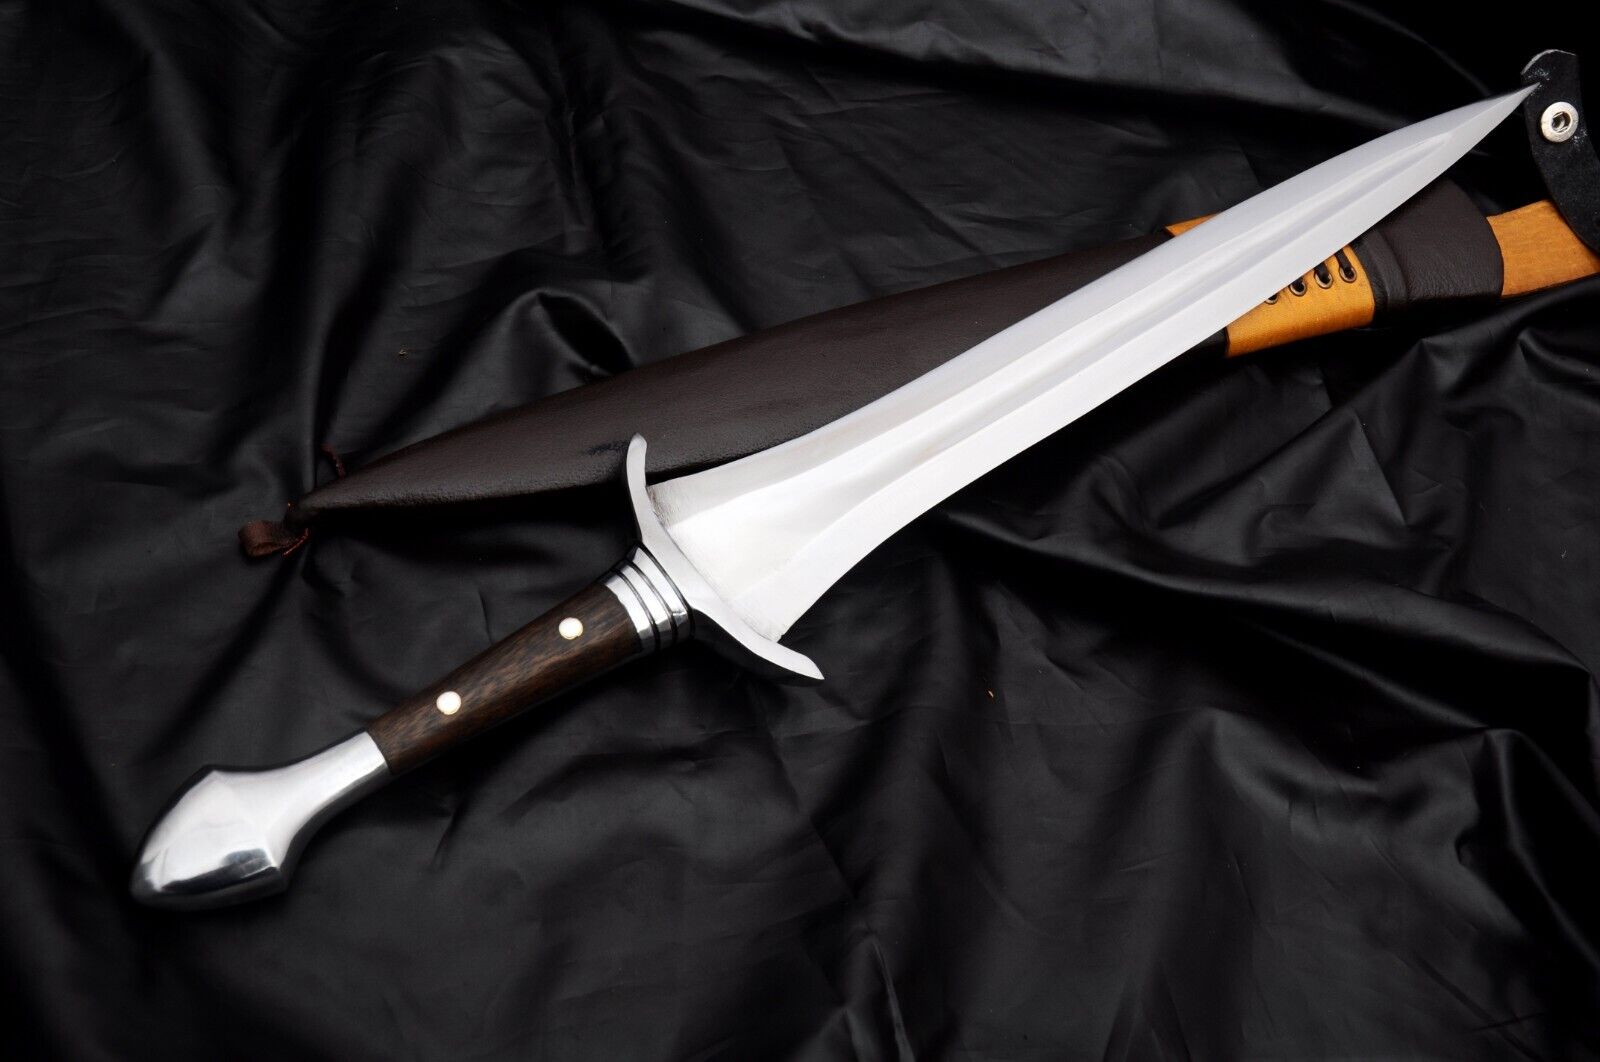 lord of rings Pippin Sword-Handmade sword-Handmade-hunting, Tactical Sword